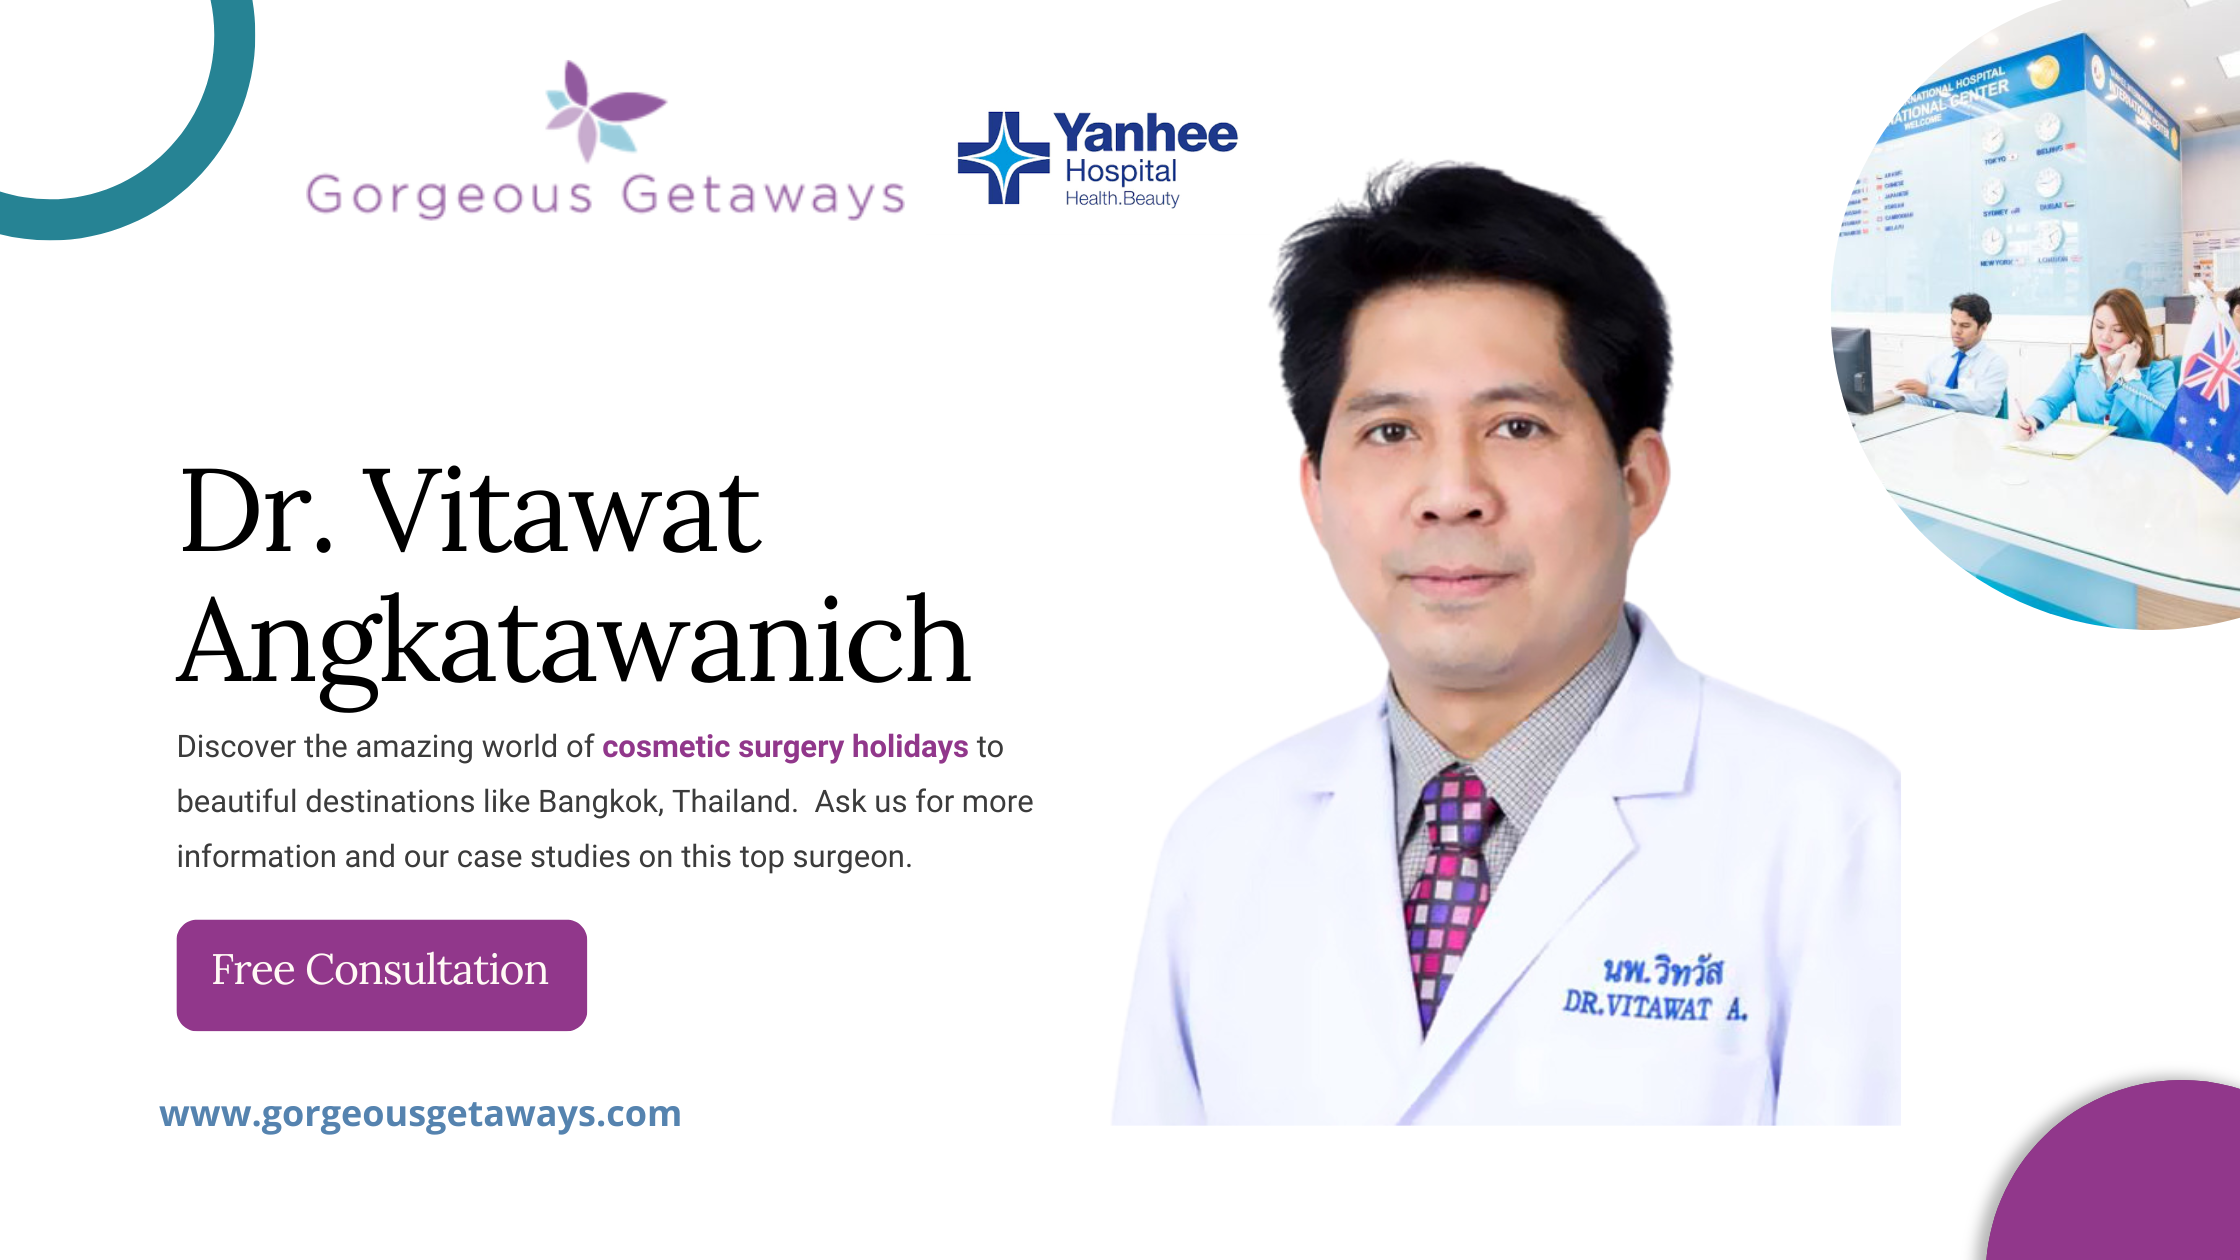 Dr. Vitawat Angkatawanich